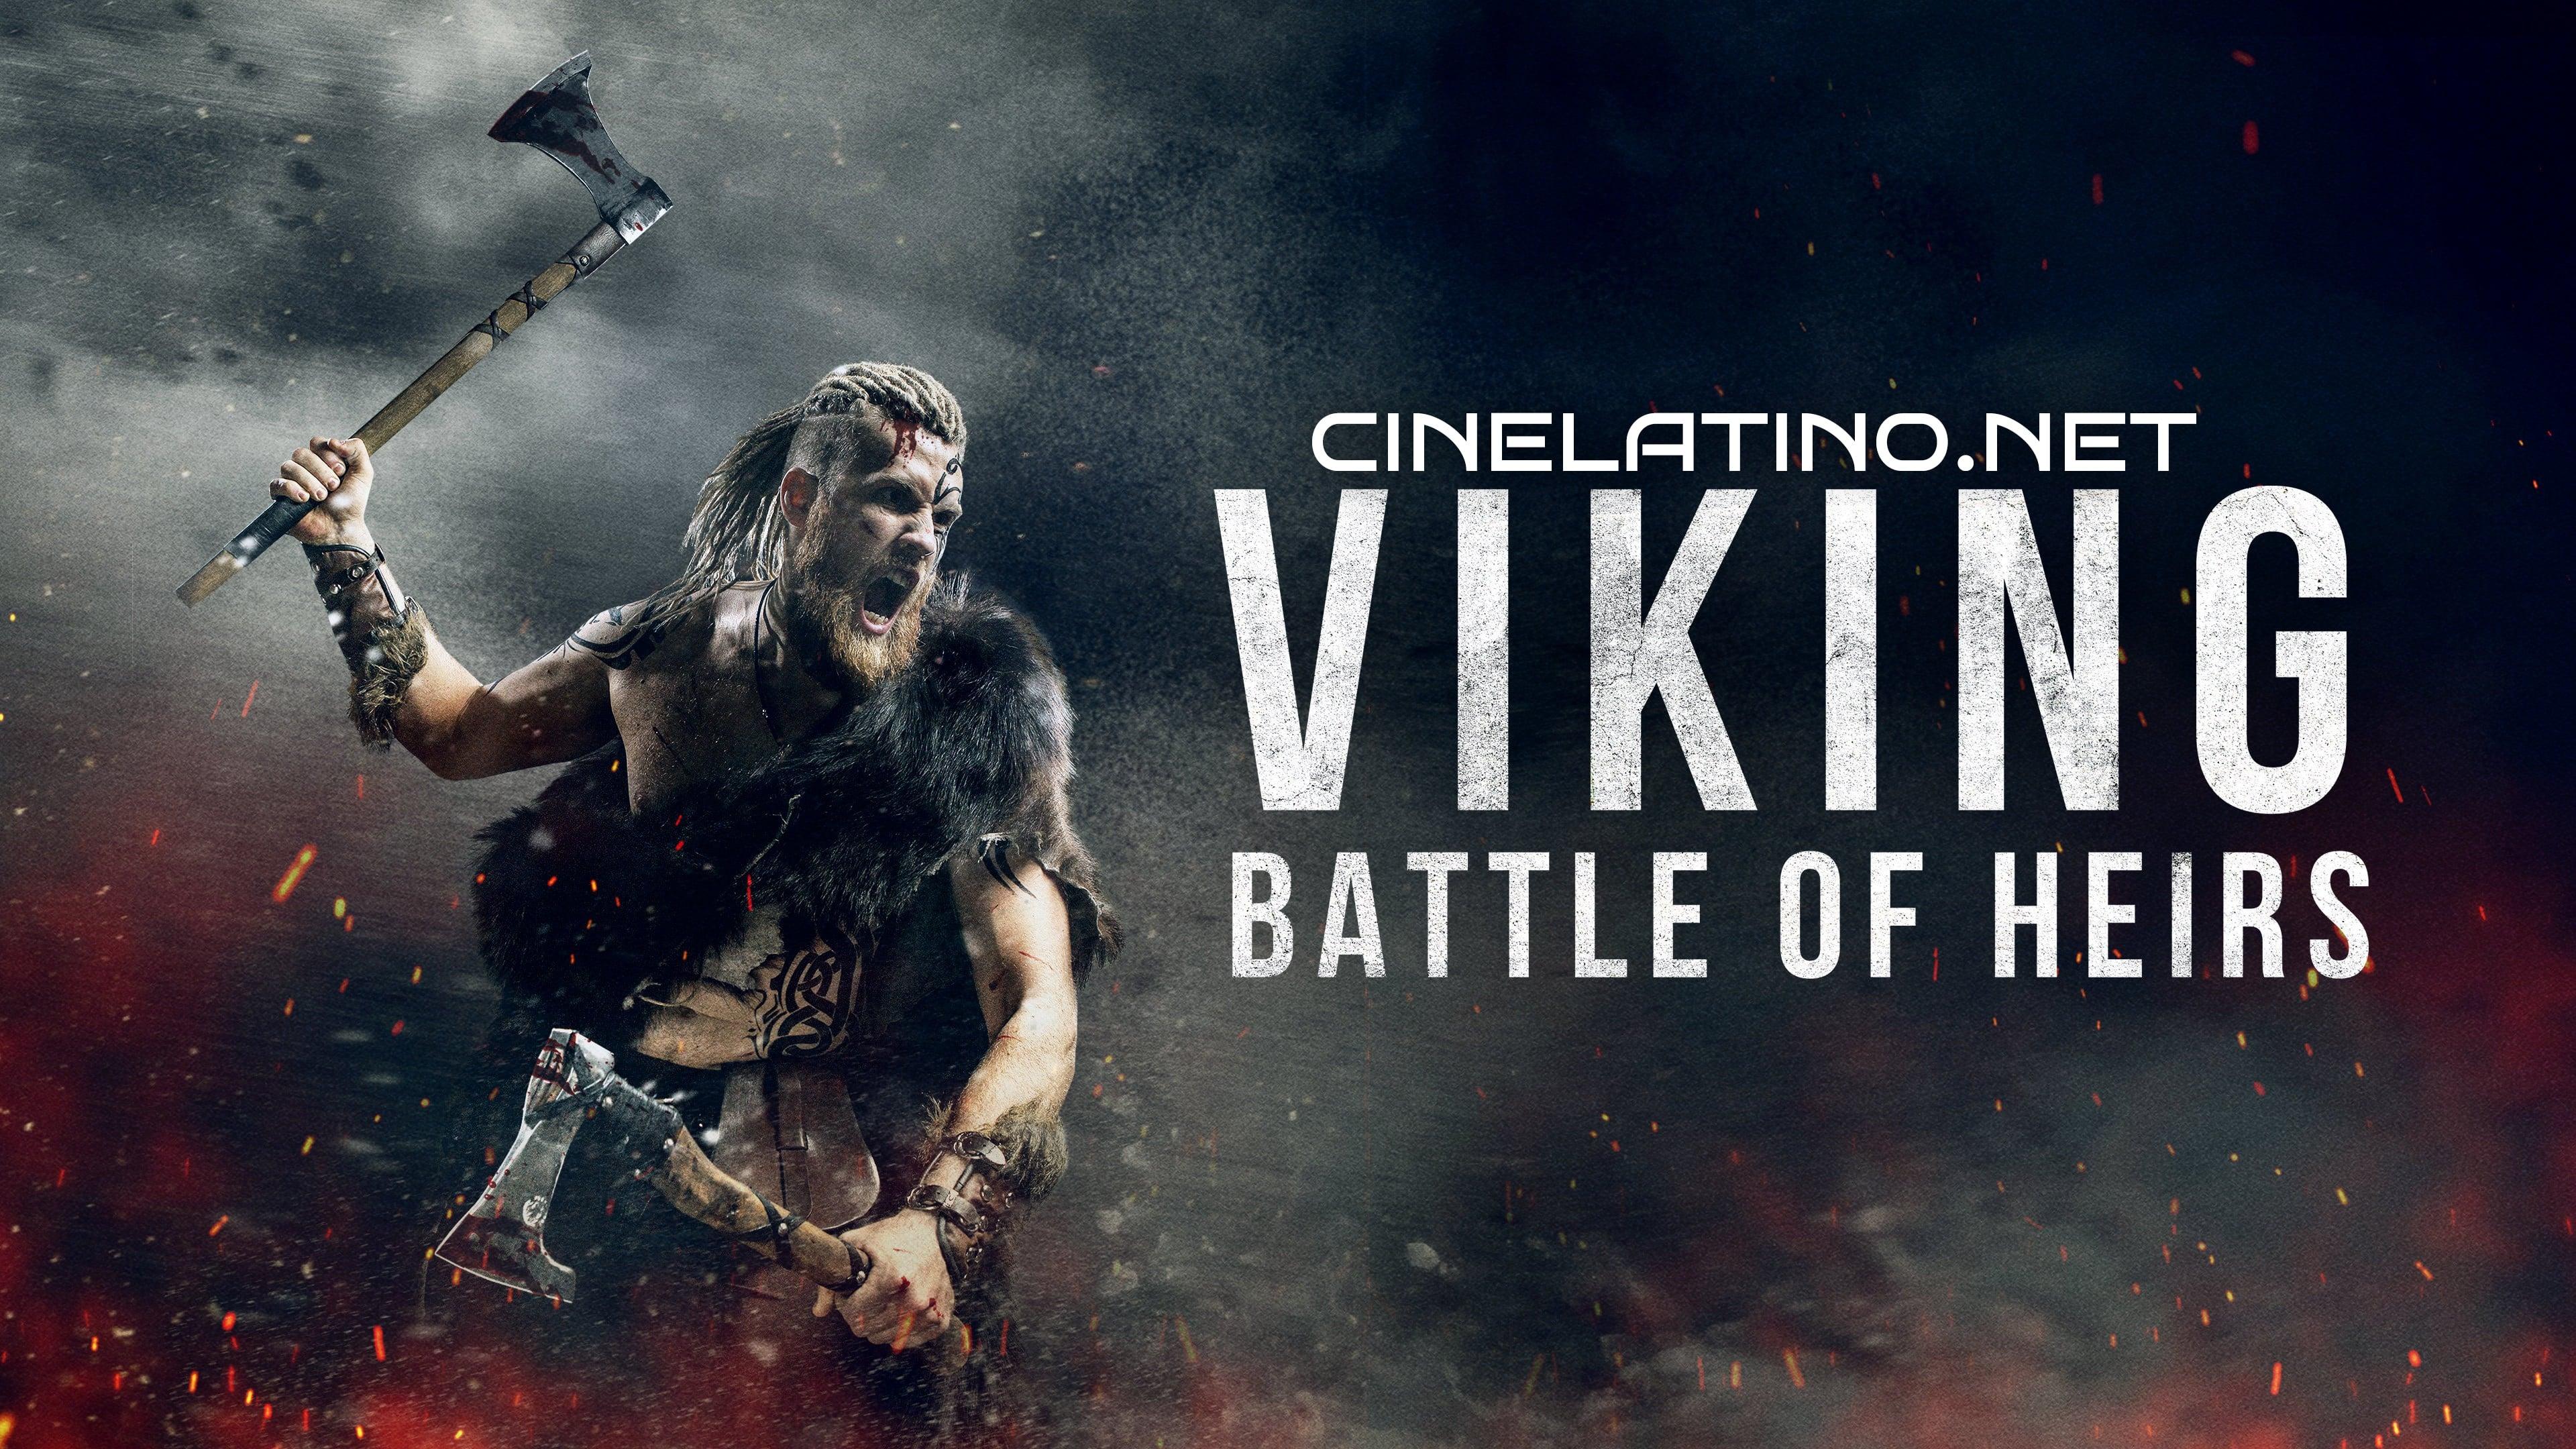 Vikings: Battle of Heirs backdrop